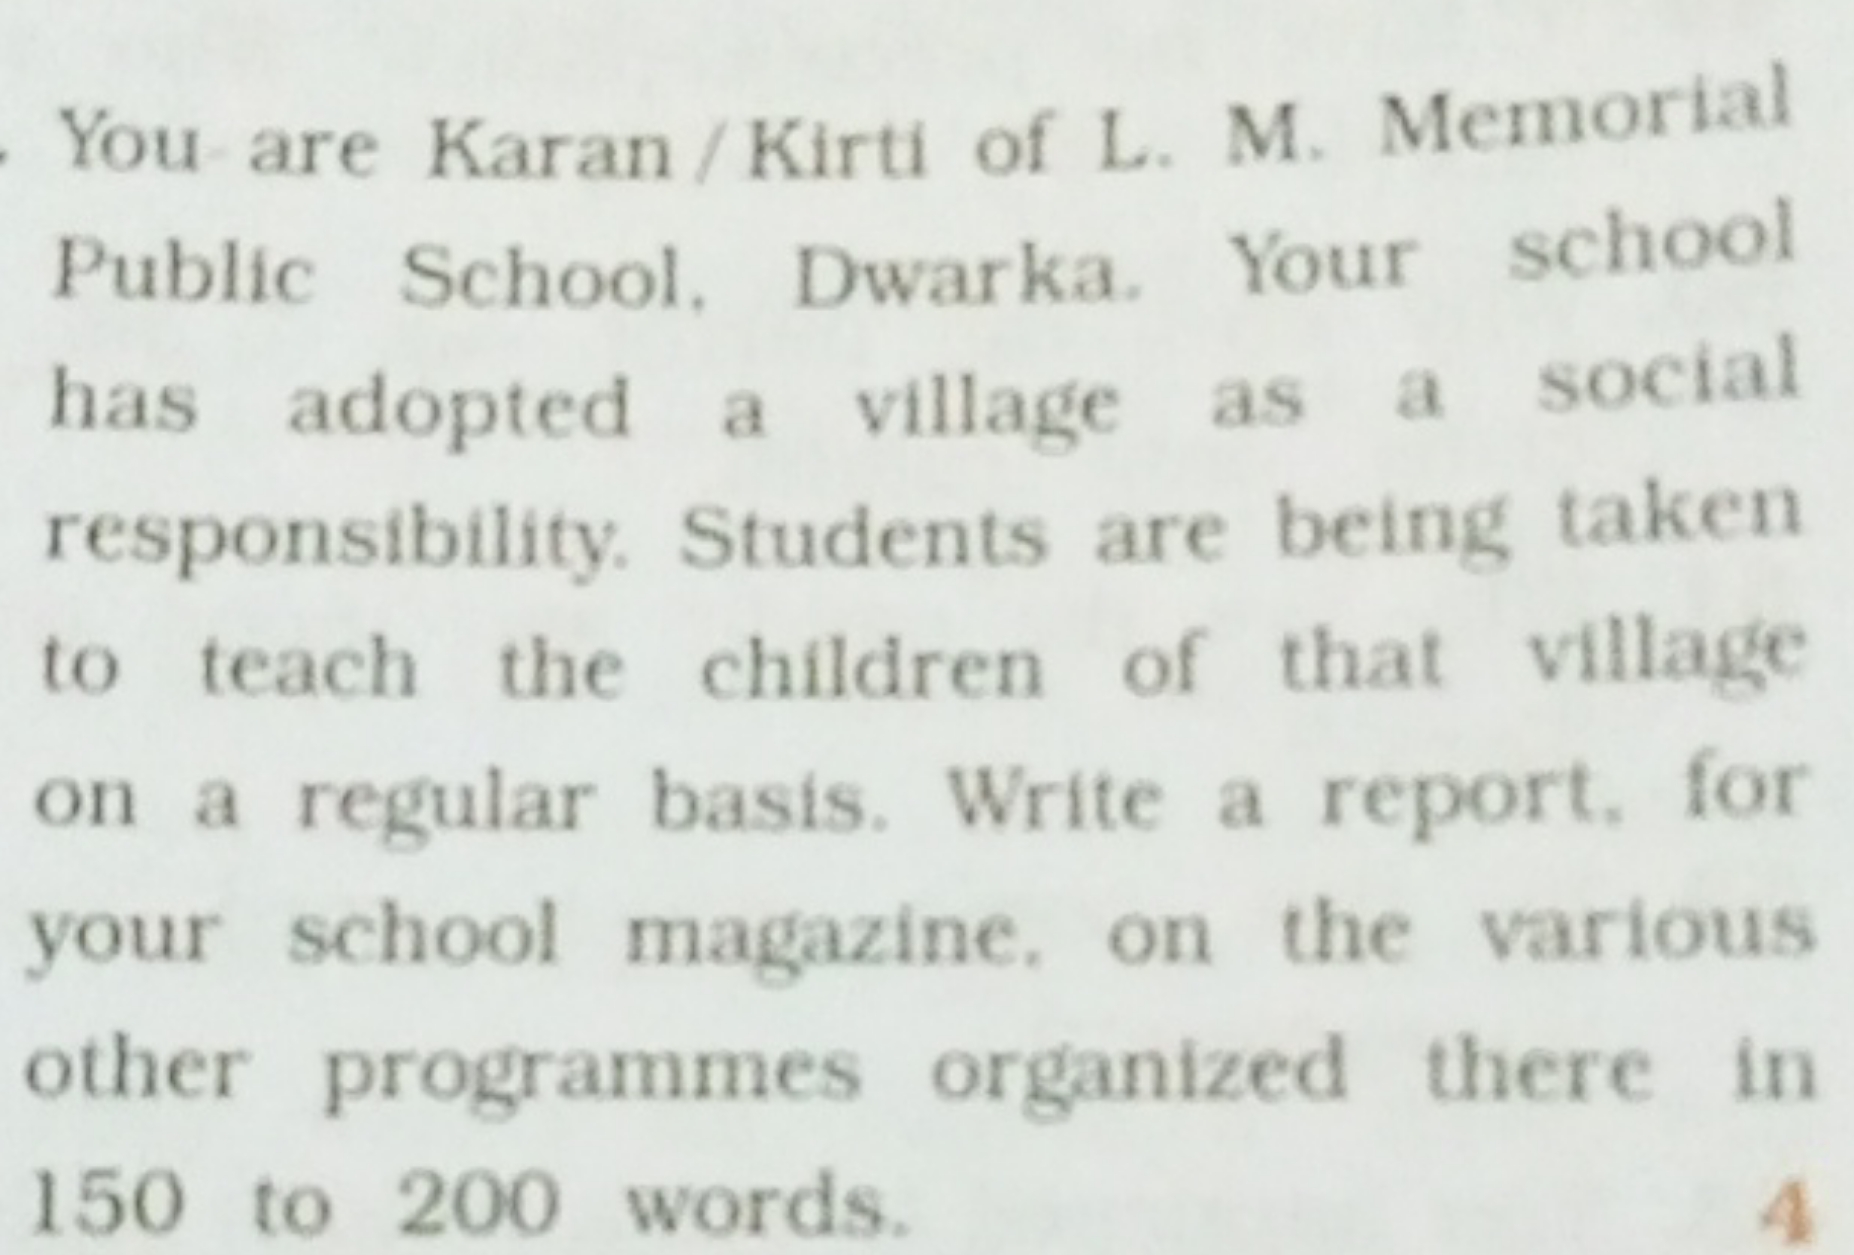 You are Karan/Kirti of L. M. Memorial Public School, Dwarka. Your scho